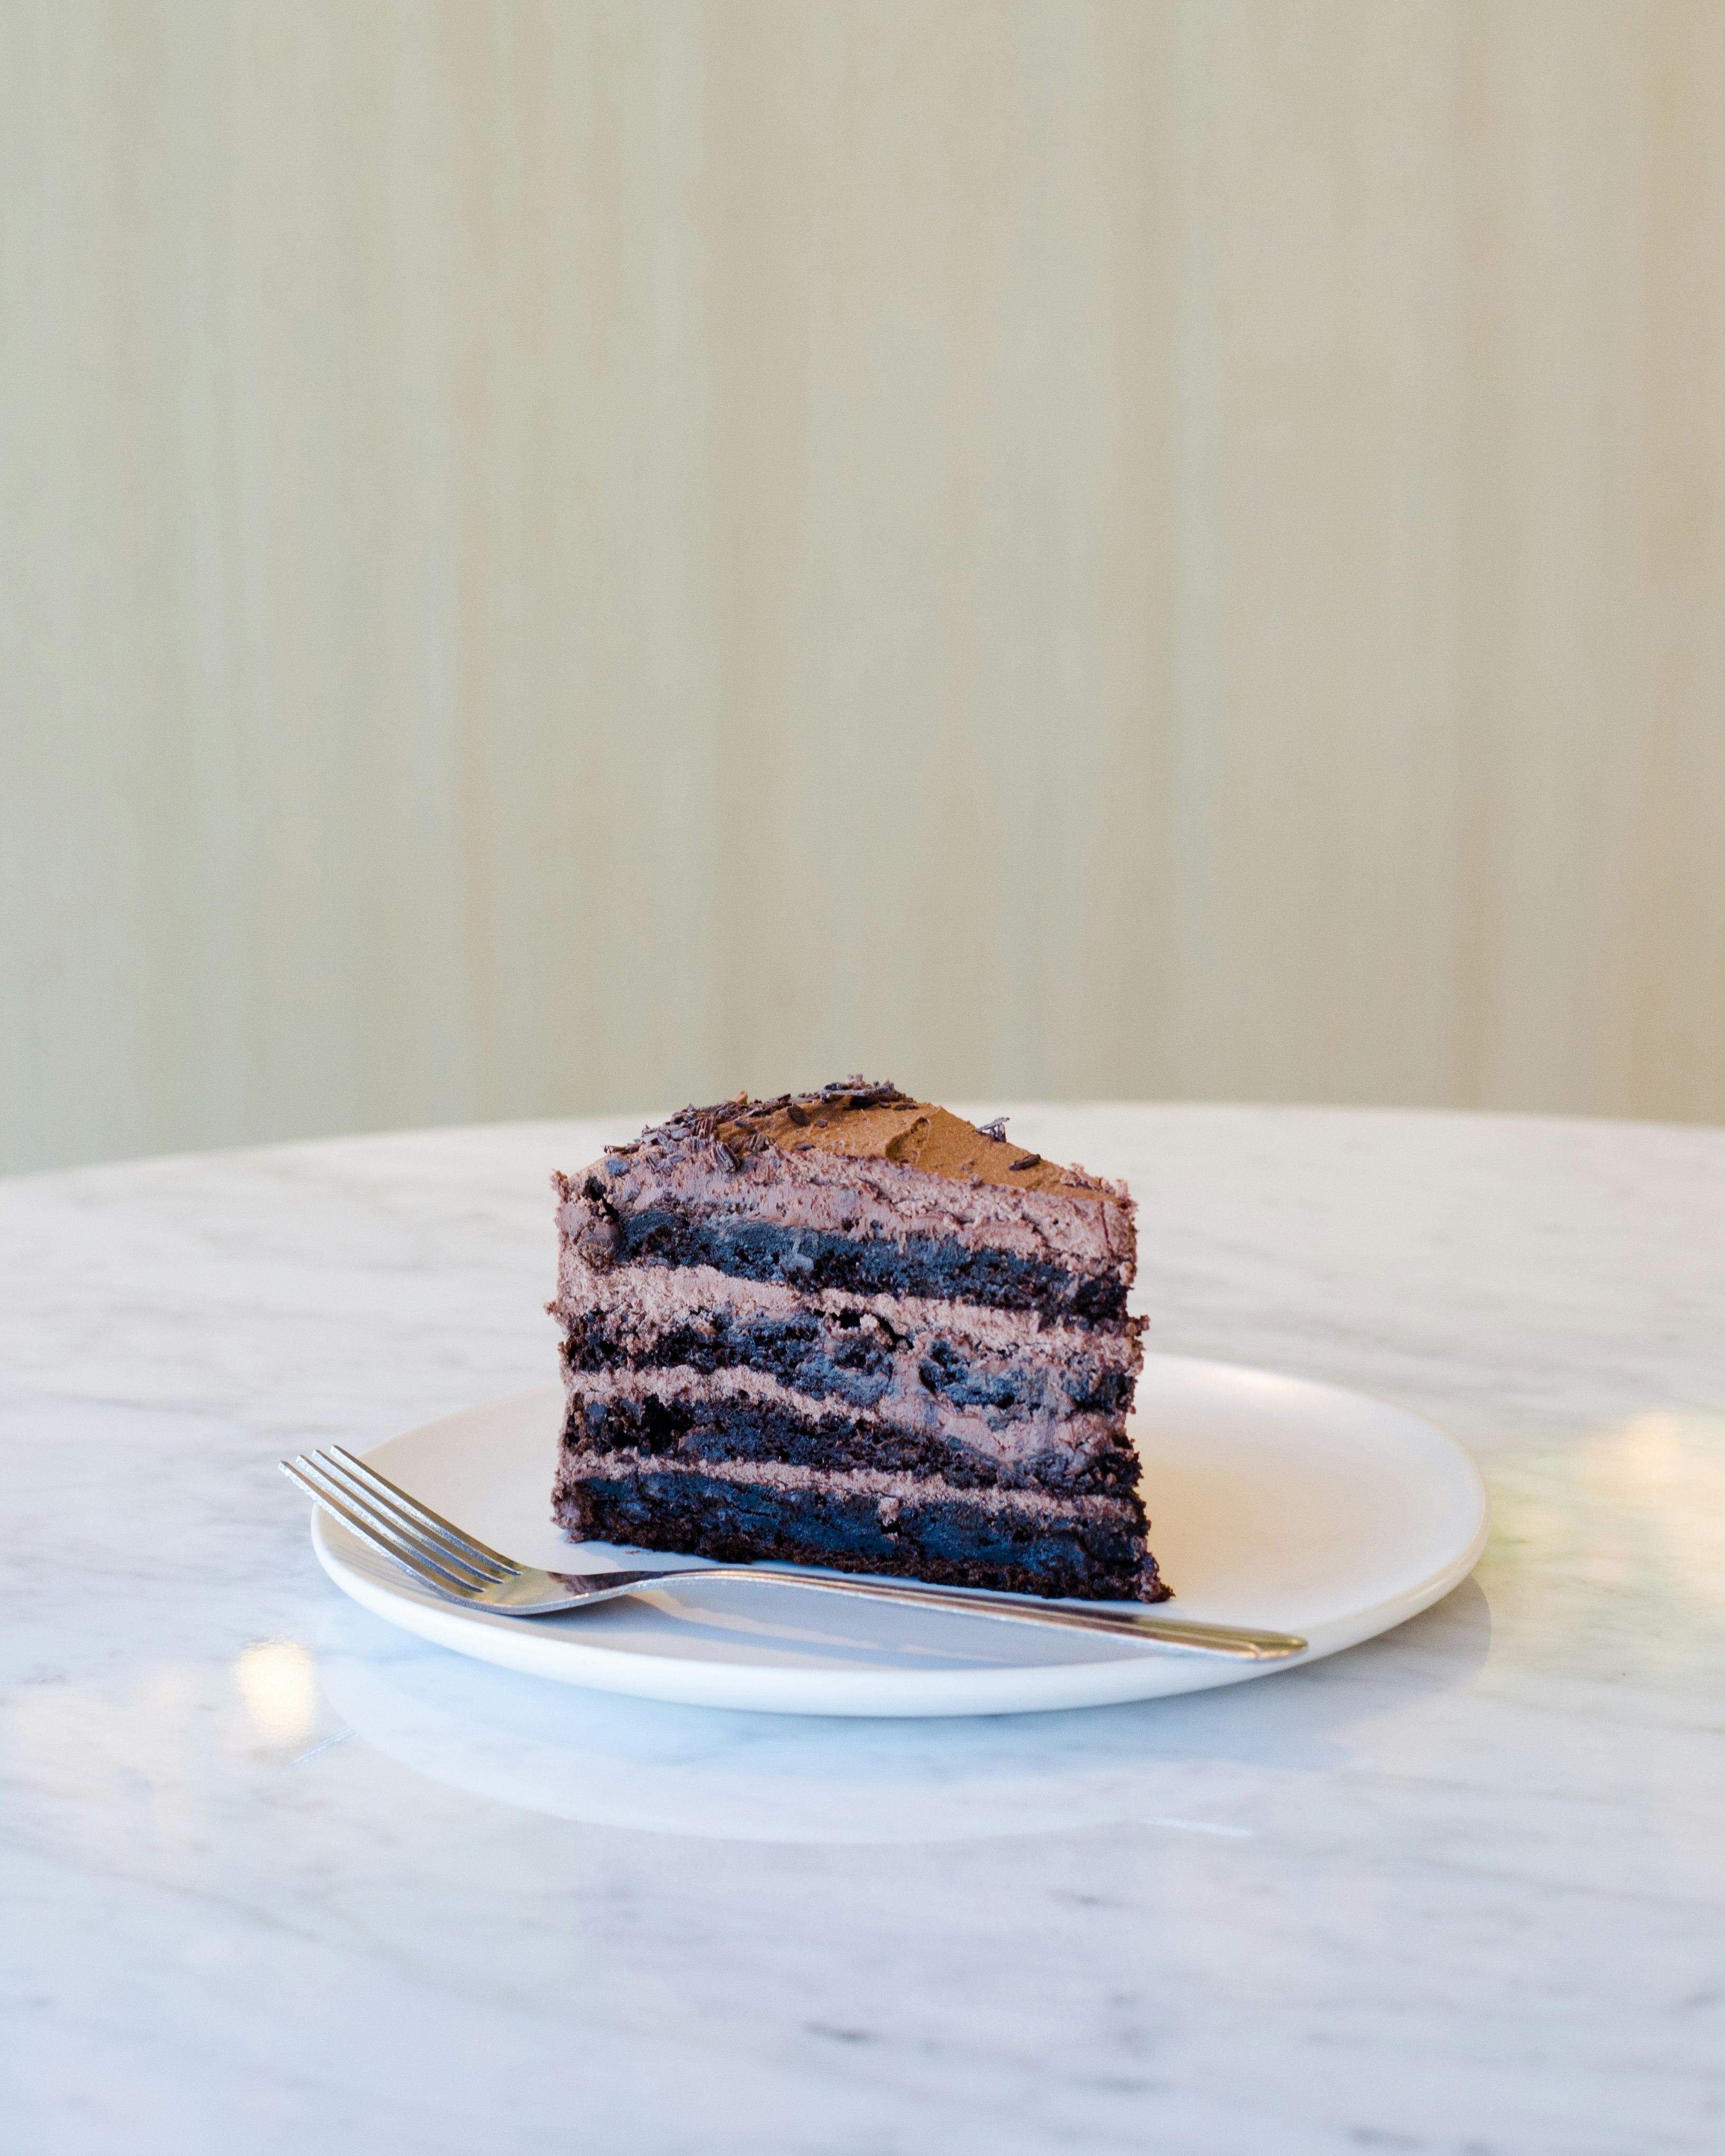 A slice of Chocolate Cake from Markham & Fitz — dessert bar in Northwest Arkansas.
markhamandfitz.com